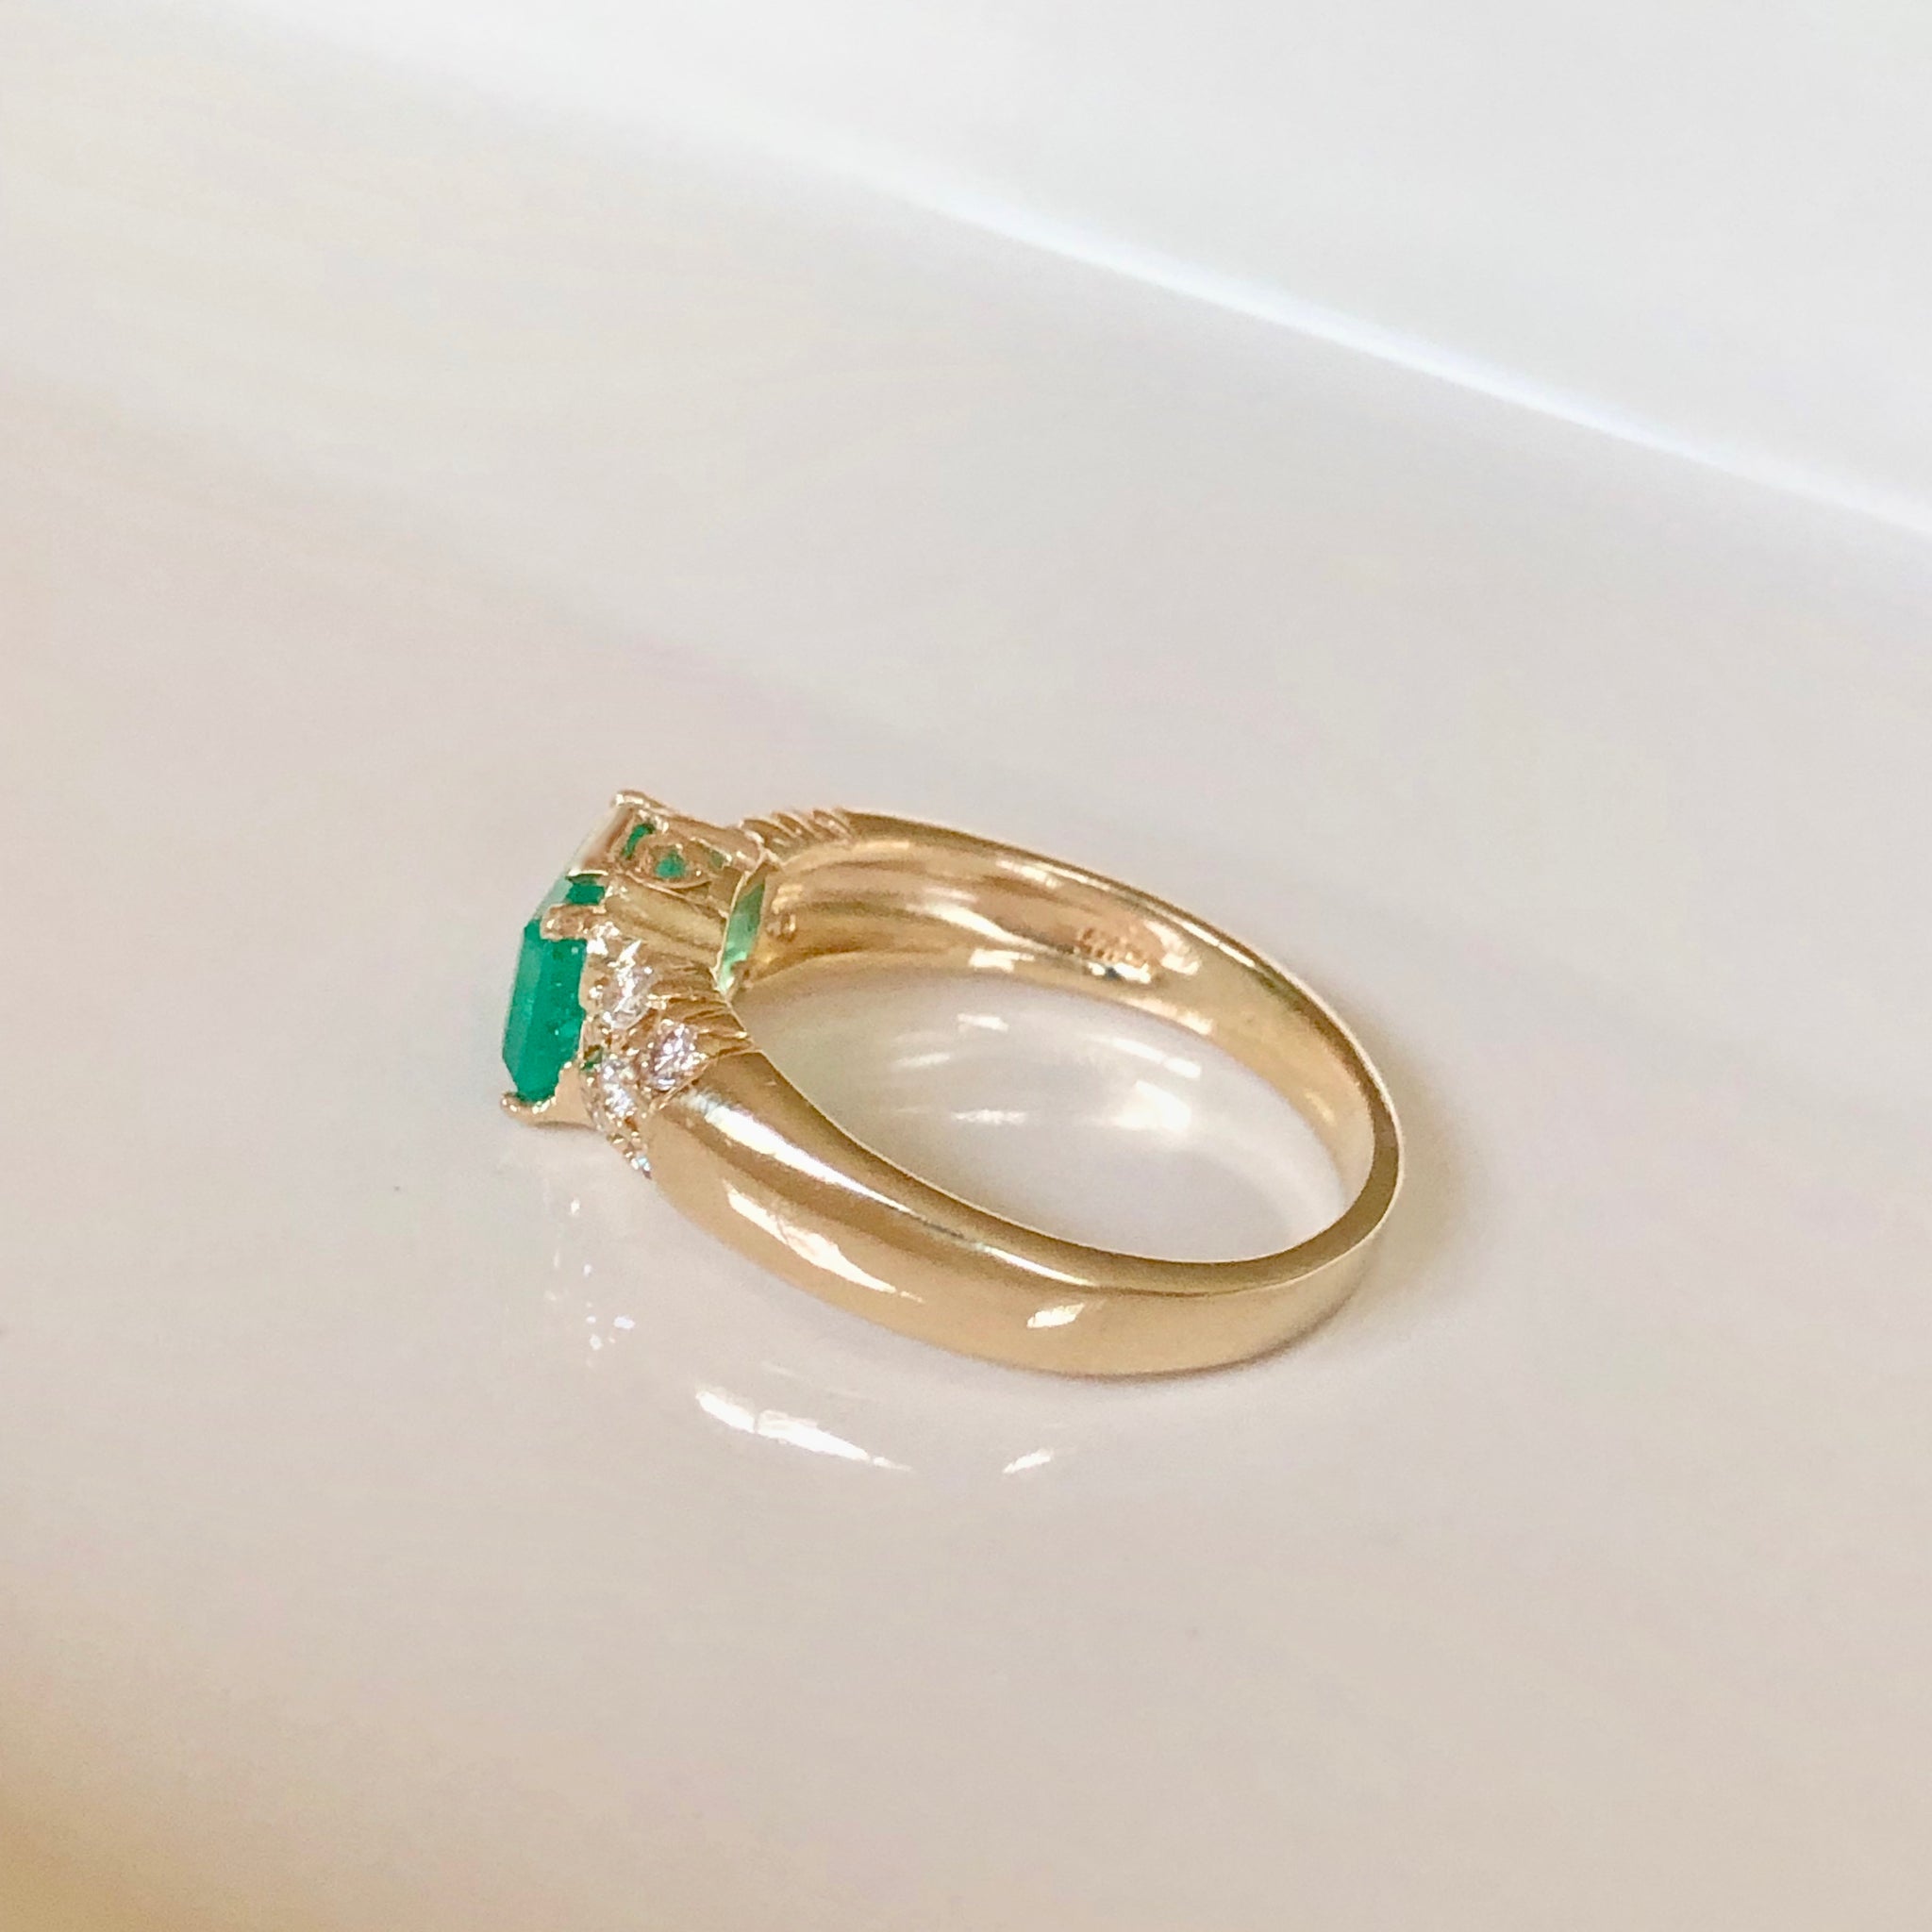 1.60 Carat Vintage Natural Emerald Ring with Diamond Accents 14 Karat Gold